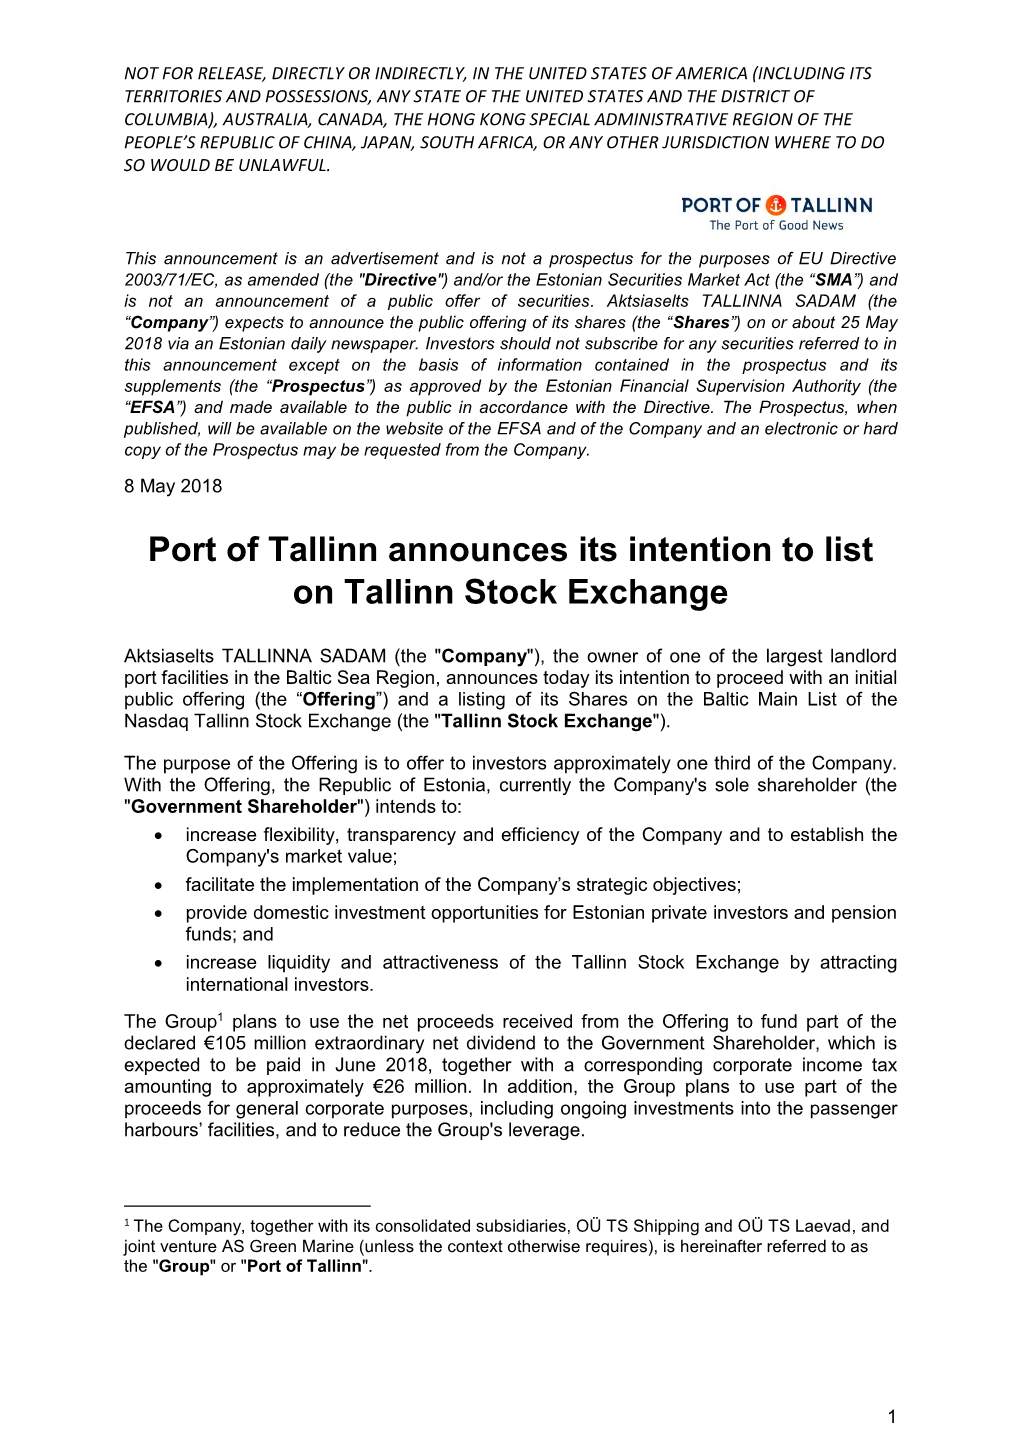 Port of Tallinn Announces Its Intention to List on Tallinn Stock Exchange